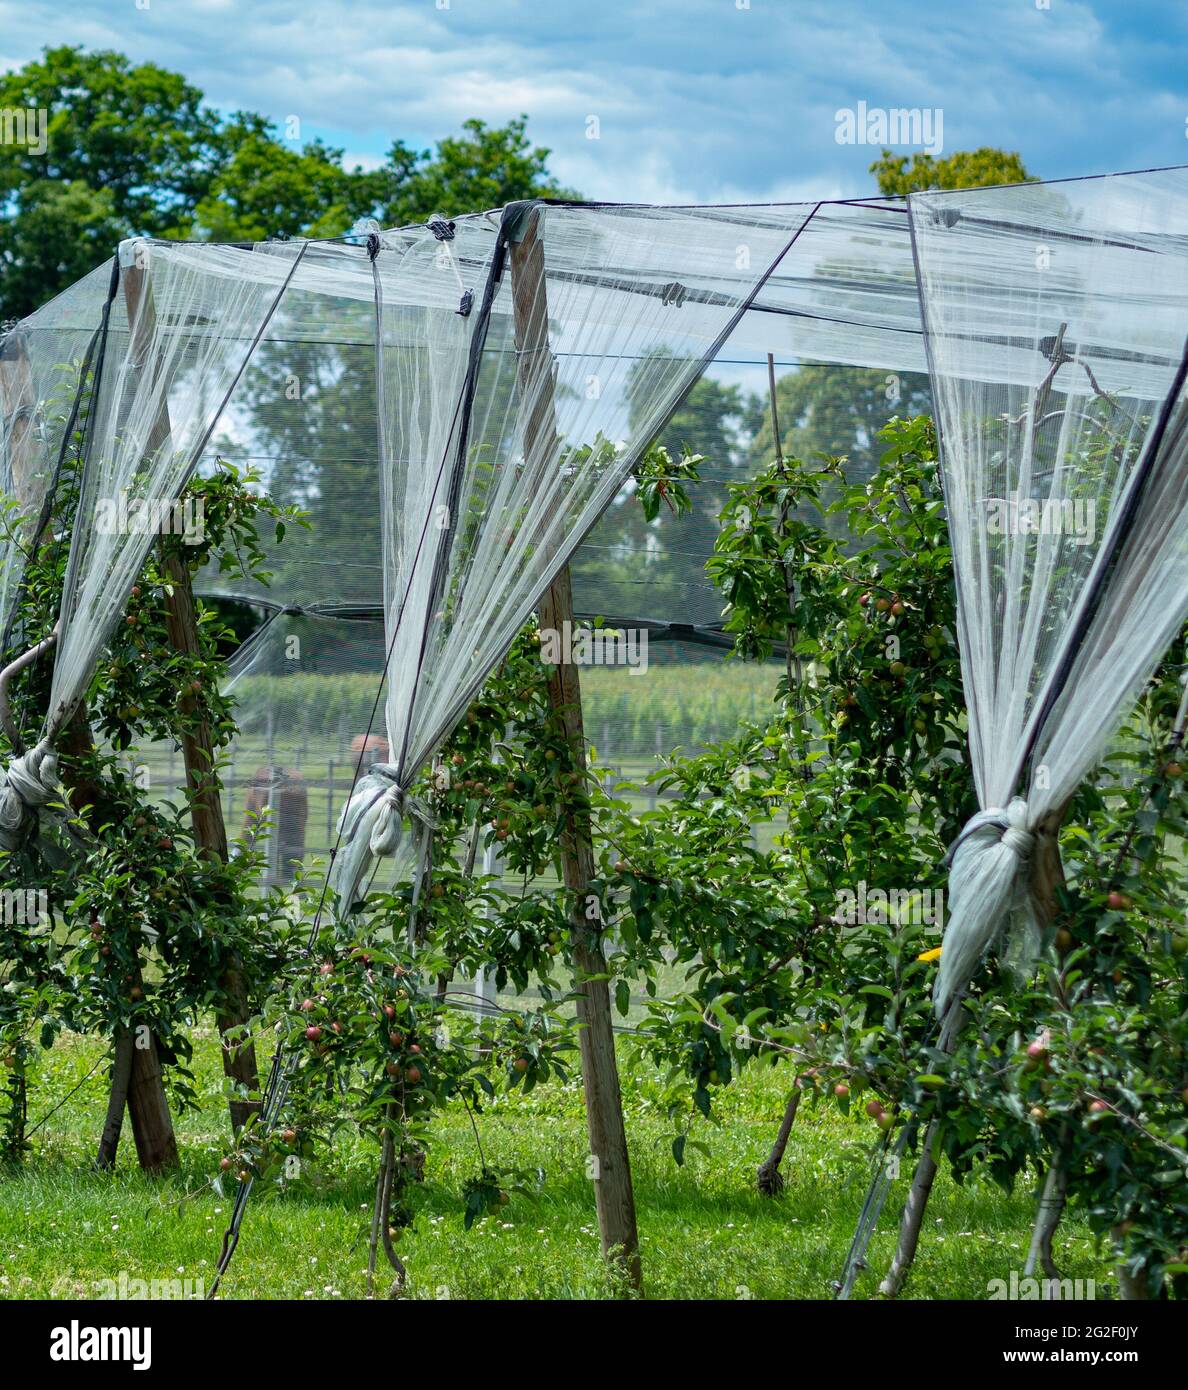 Fruit growing agriculture in the region of Geneva, Switzerland Stock Photo